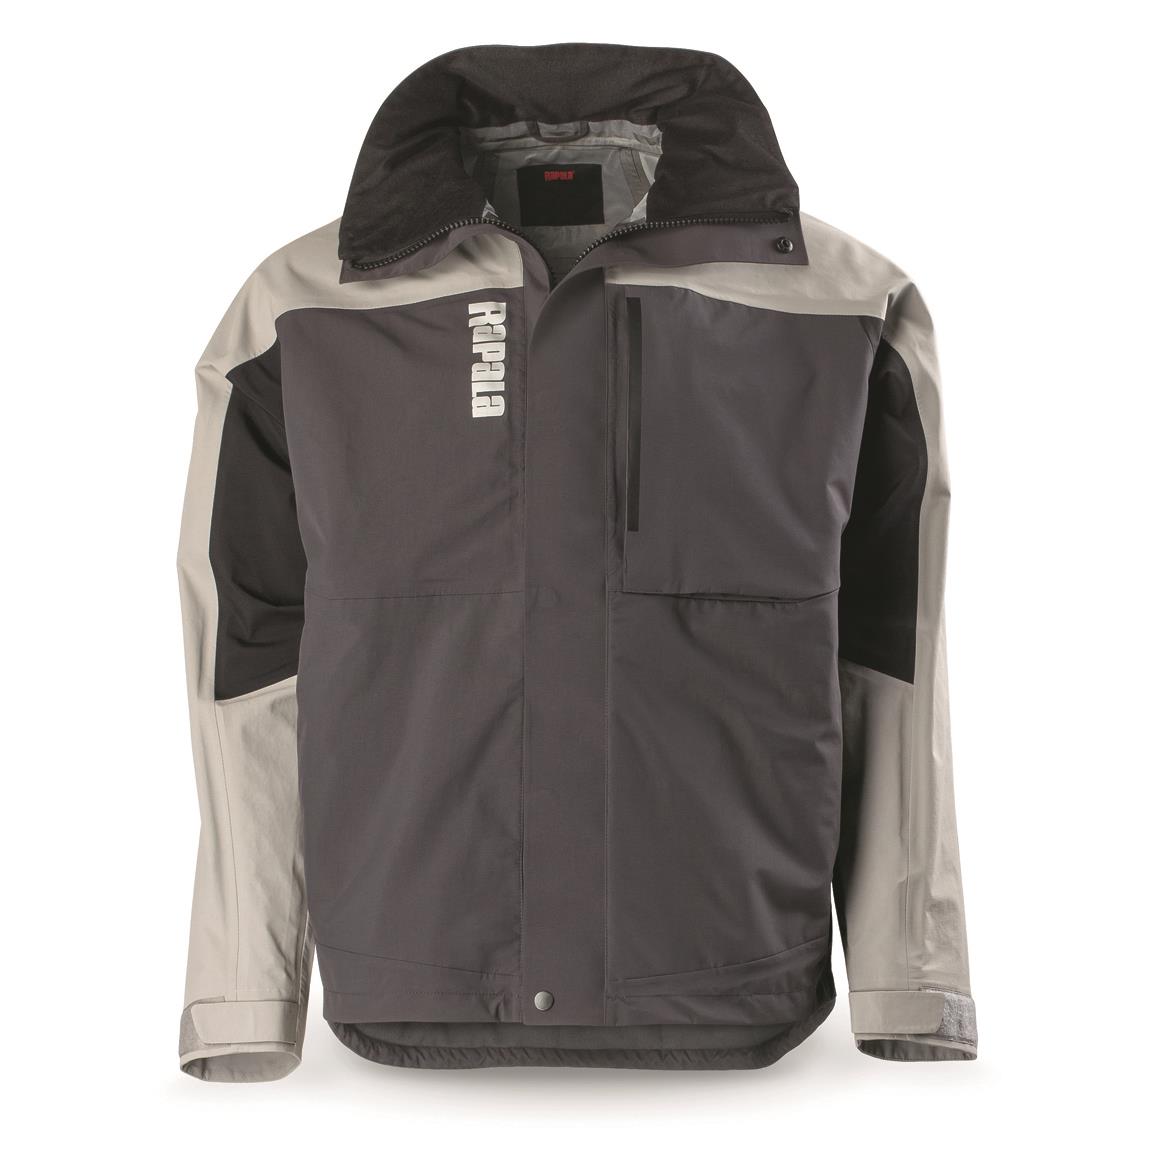 Simms Waypoints Rain Jacket - 730433, Jackets, Coats & Rain Gear